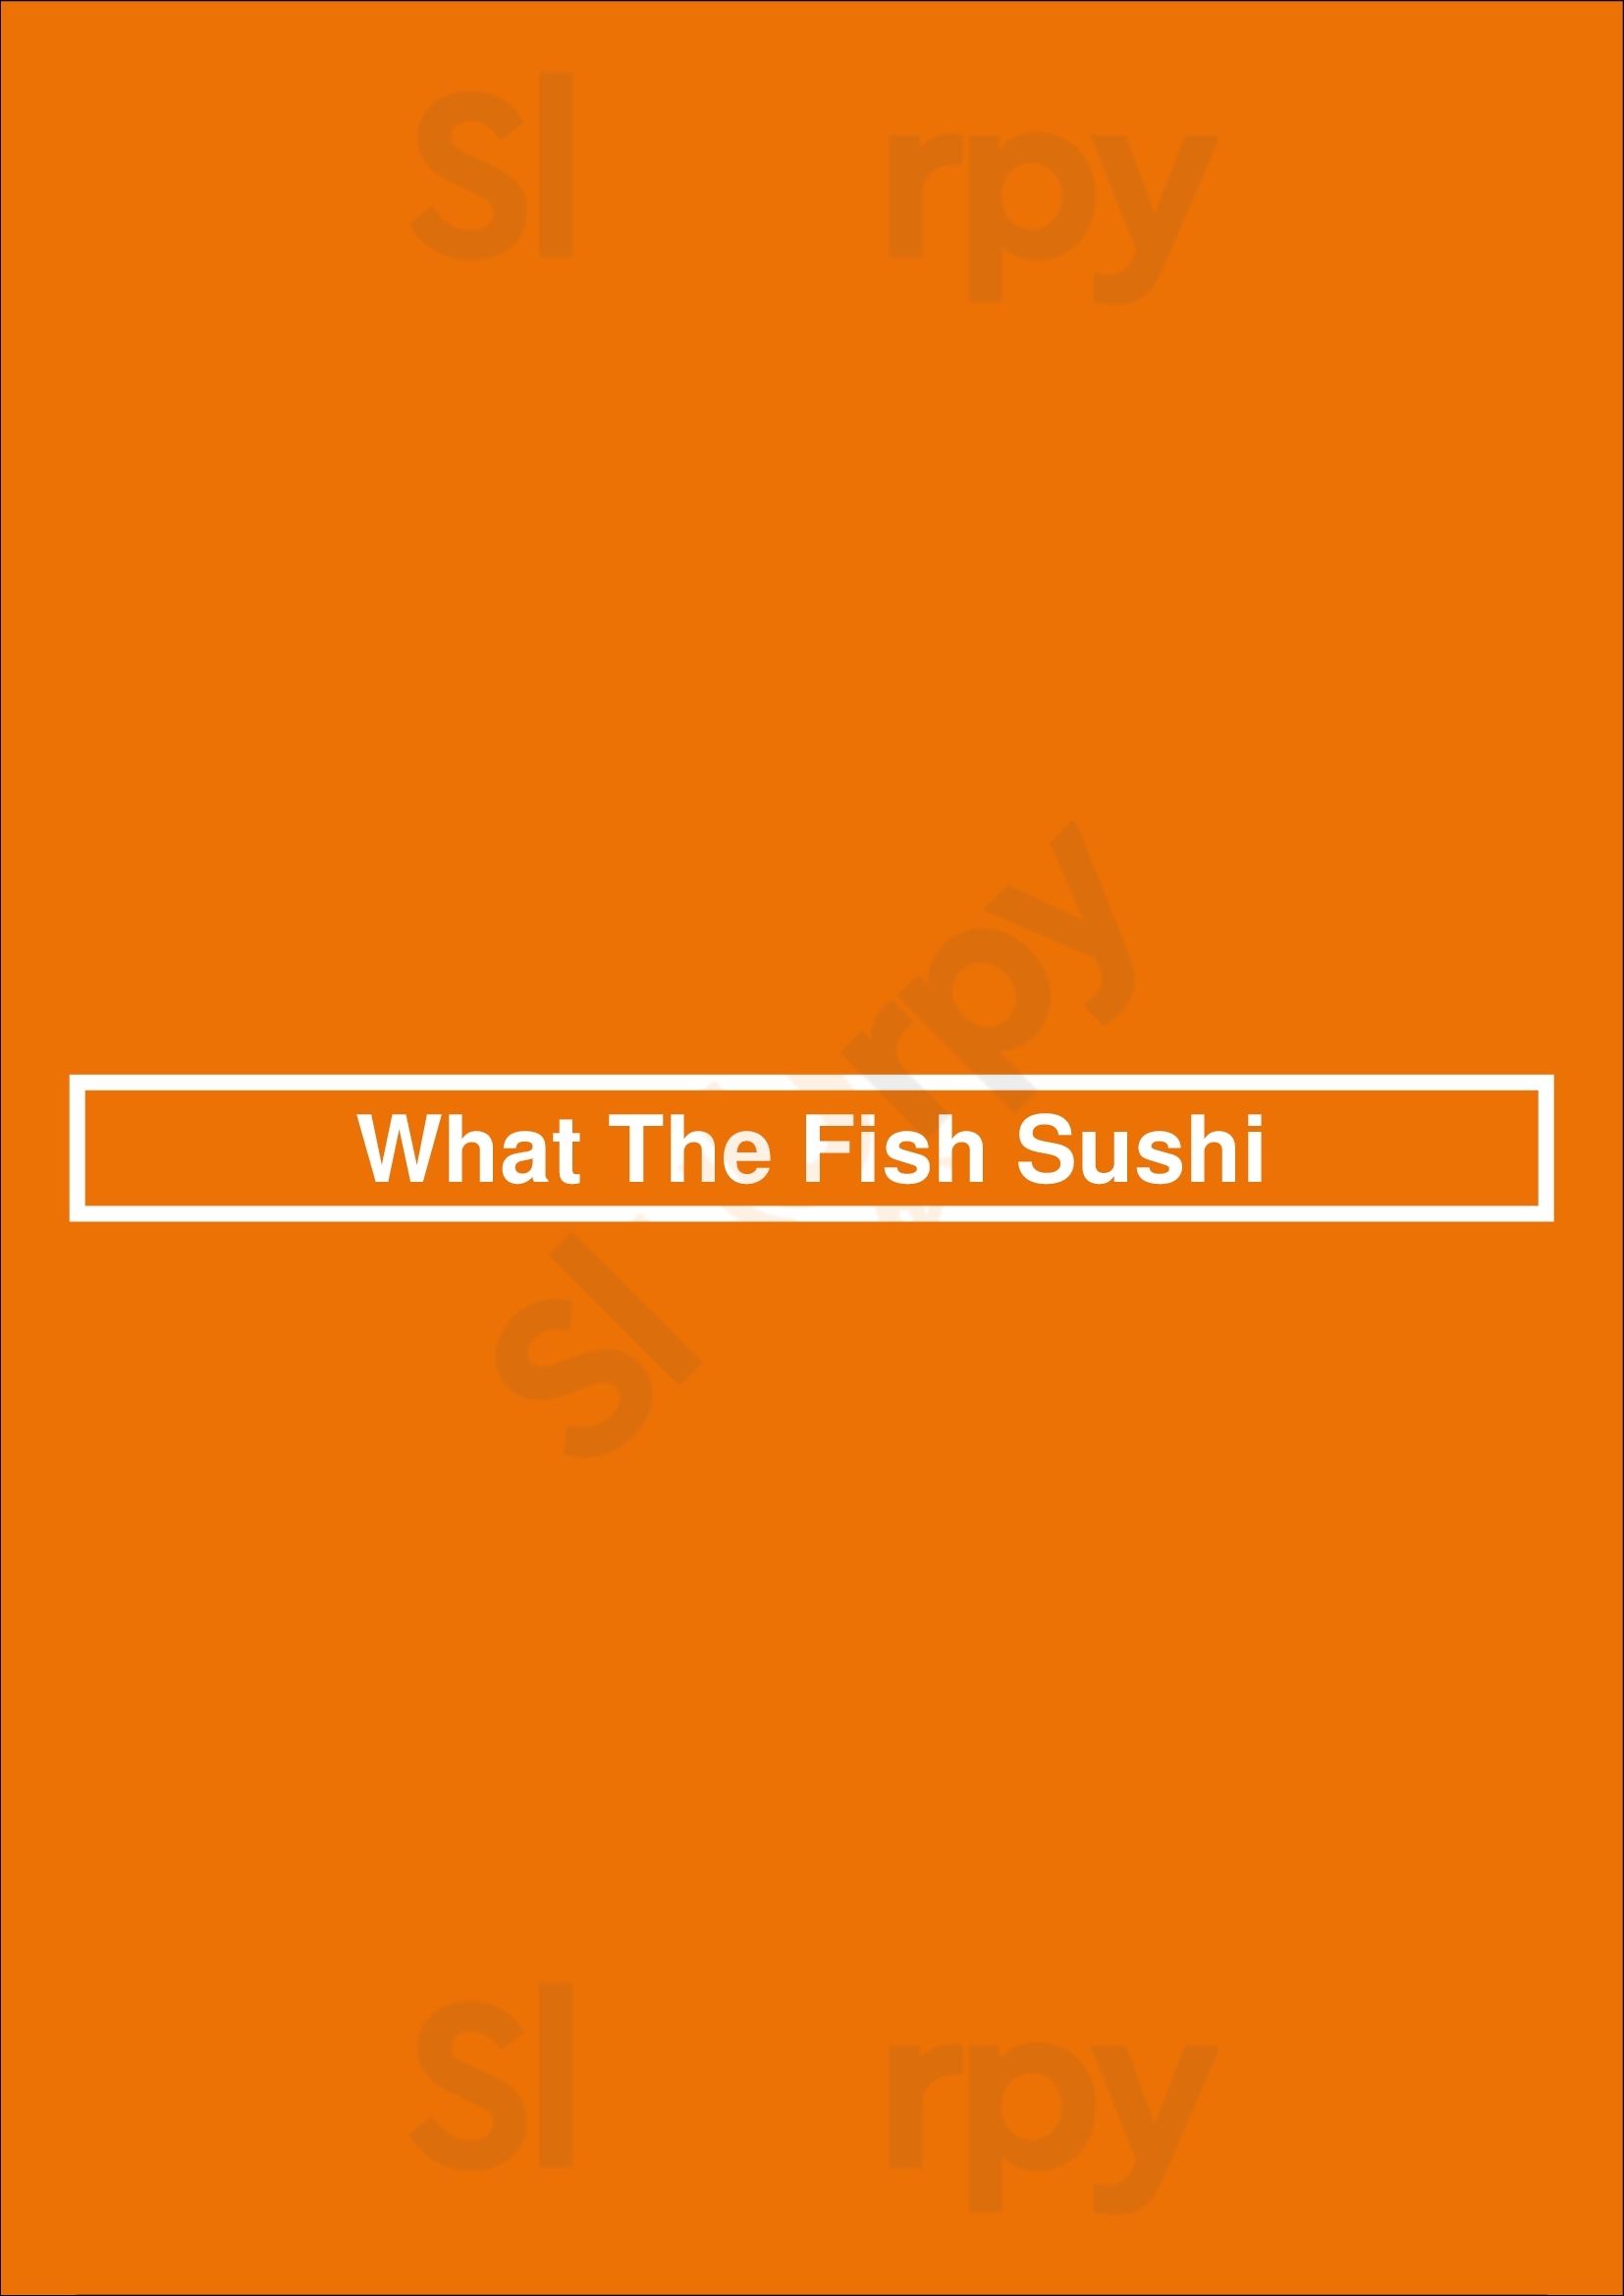 What The Fish Sushi Los Angeles Menu - 1